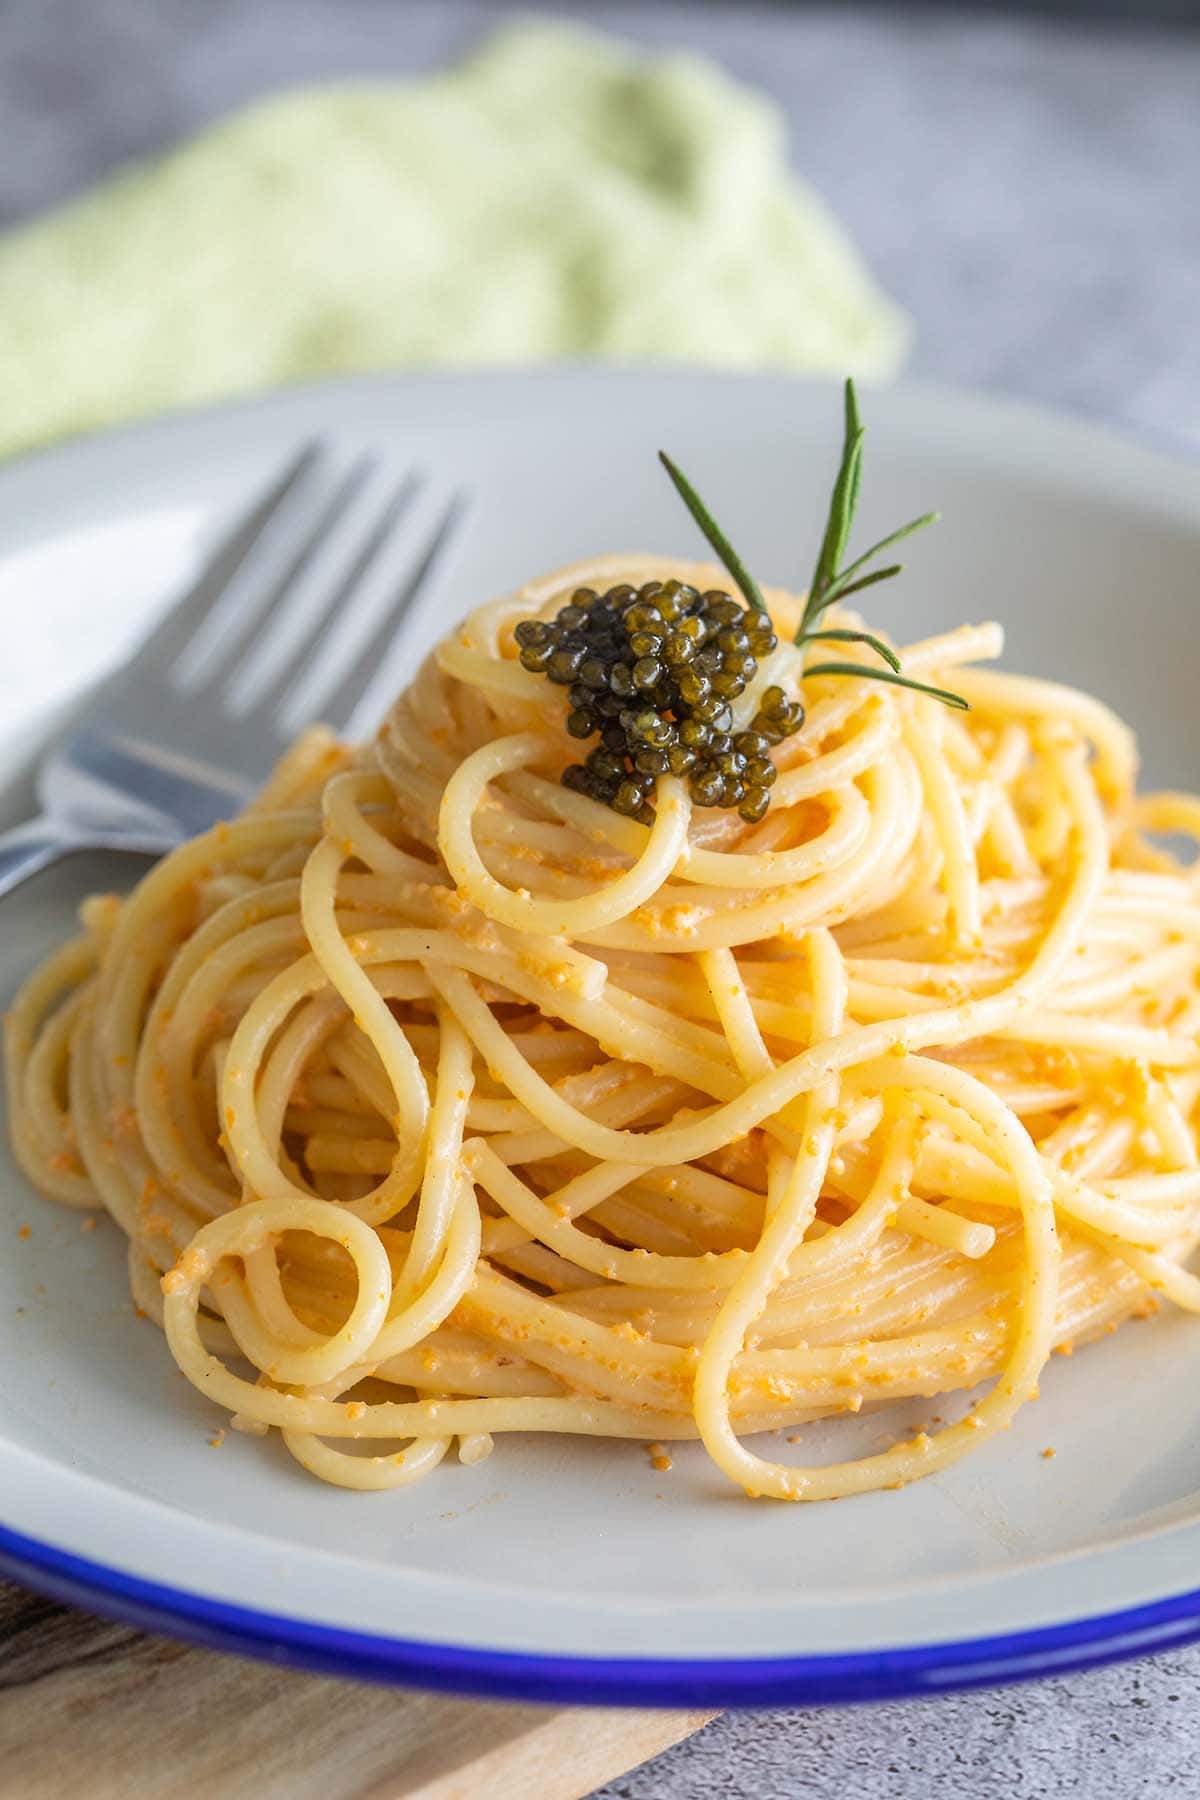 Uni spaghetti served with fresh Japanese sea urchins.